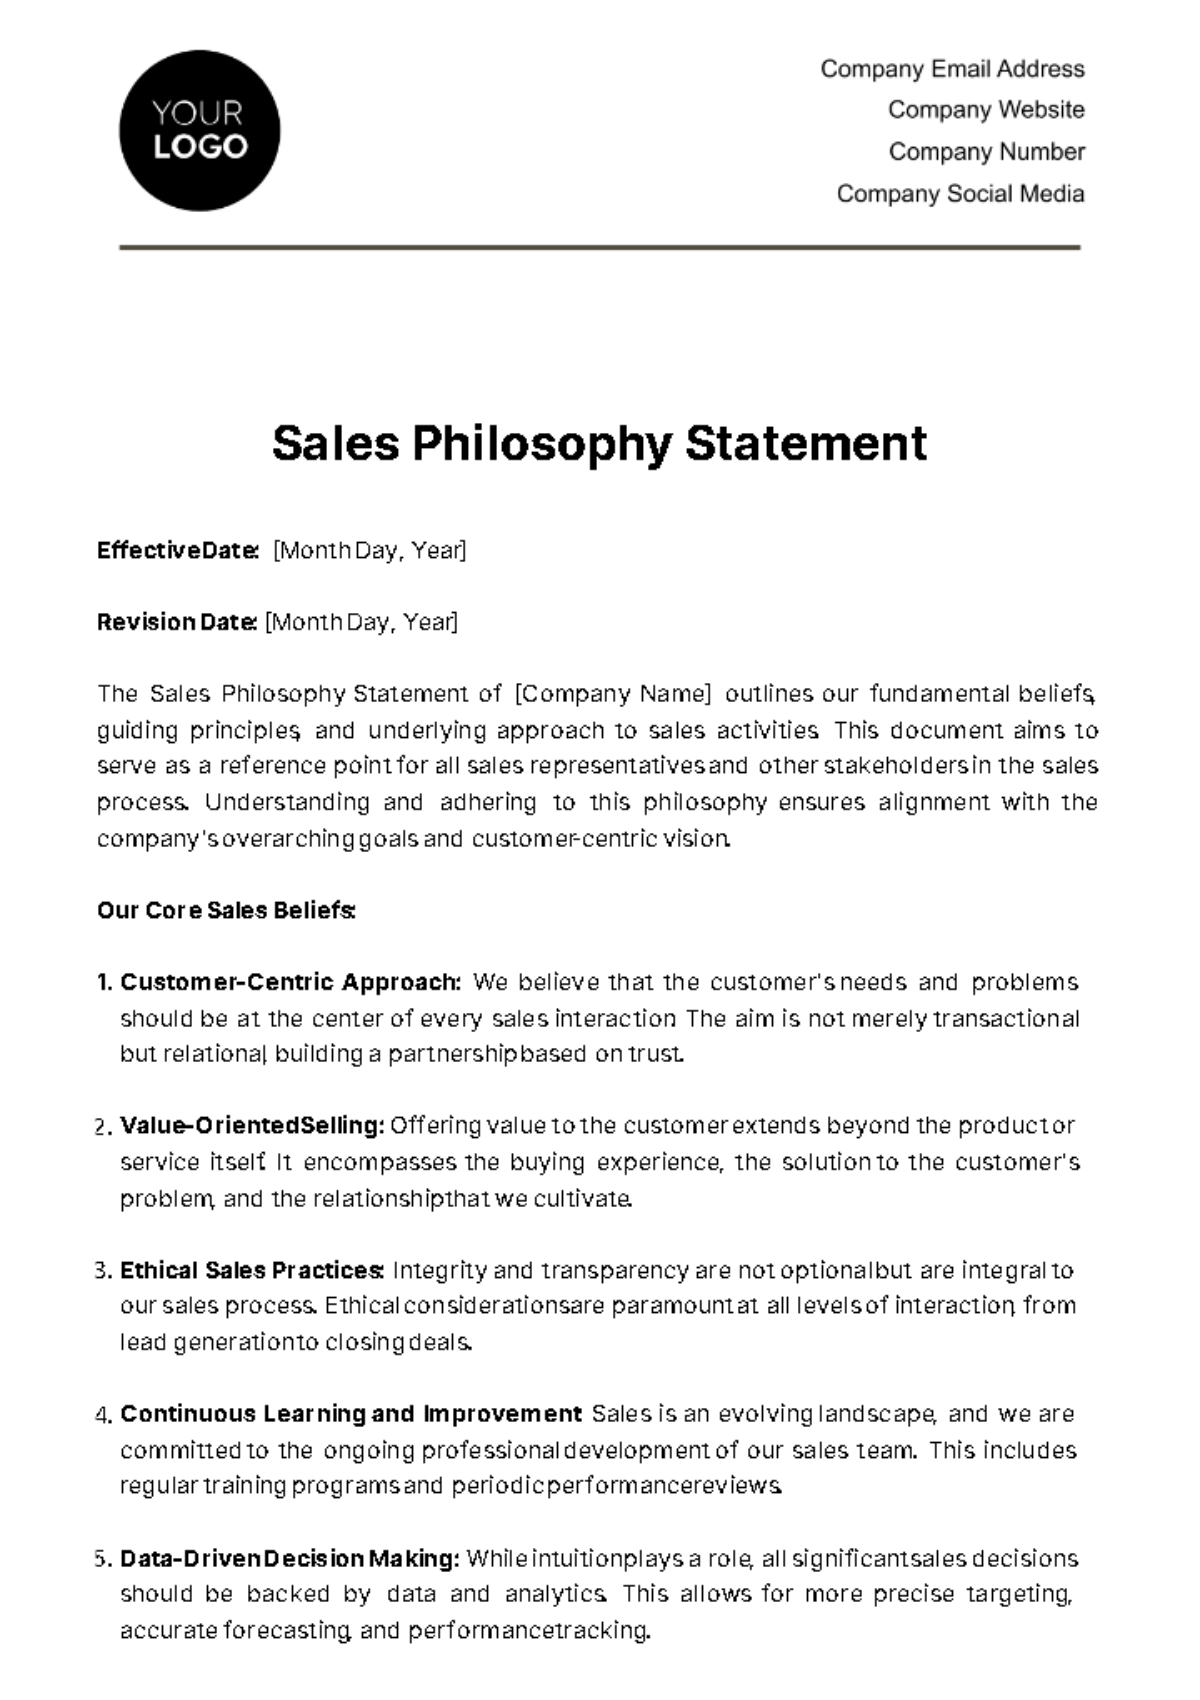 Sales Philosophy Statement Template